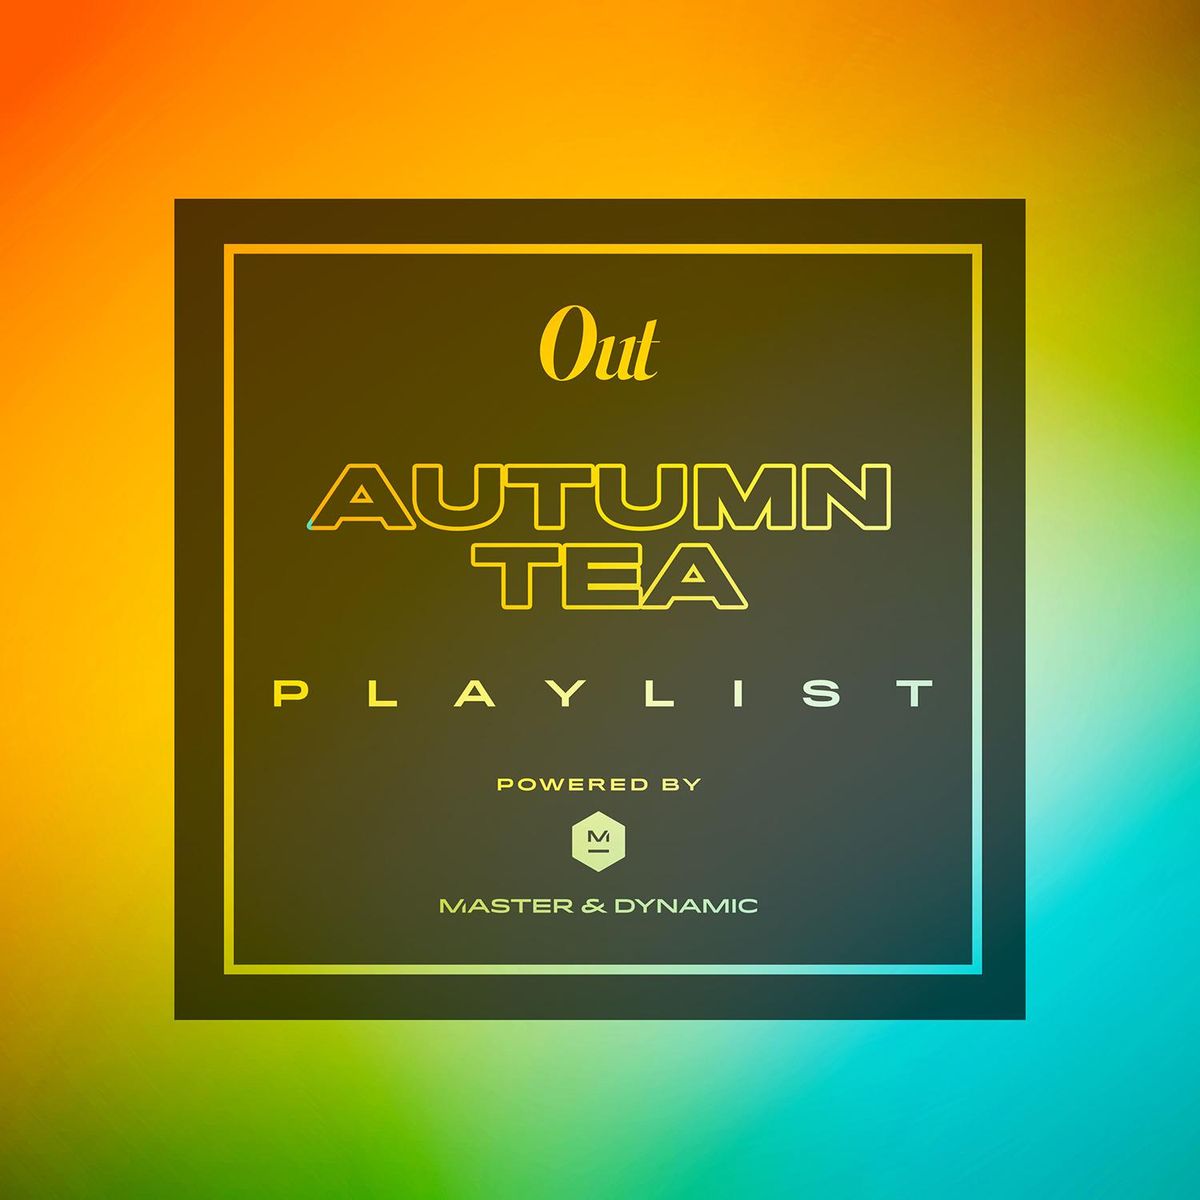 Autumn Tea Playist Out DJ Mikey Pop Master & Dynamic 